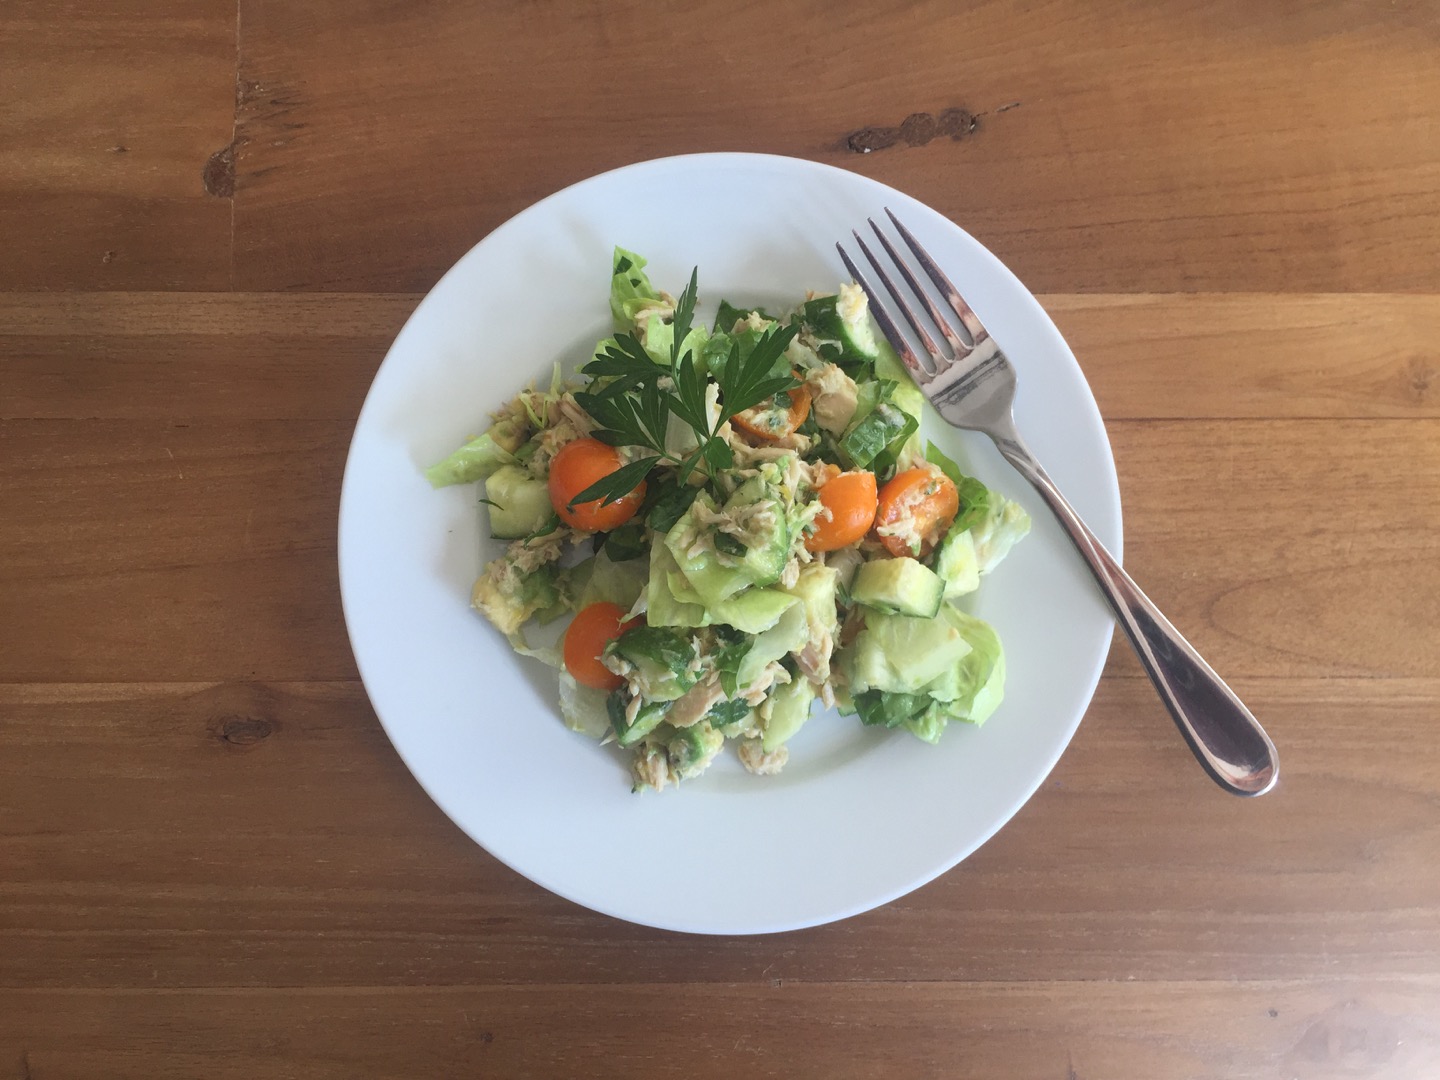 Simple salad with avocado and tuna